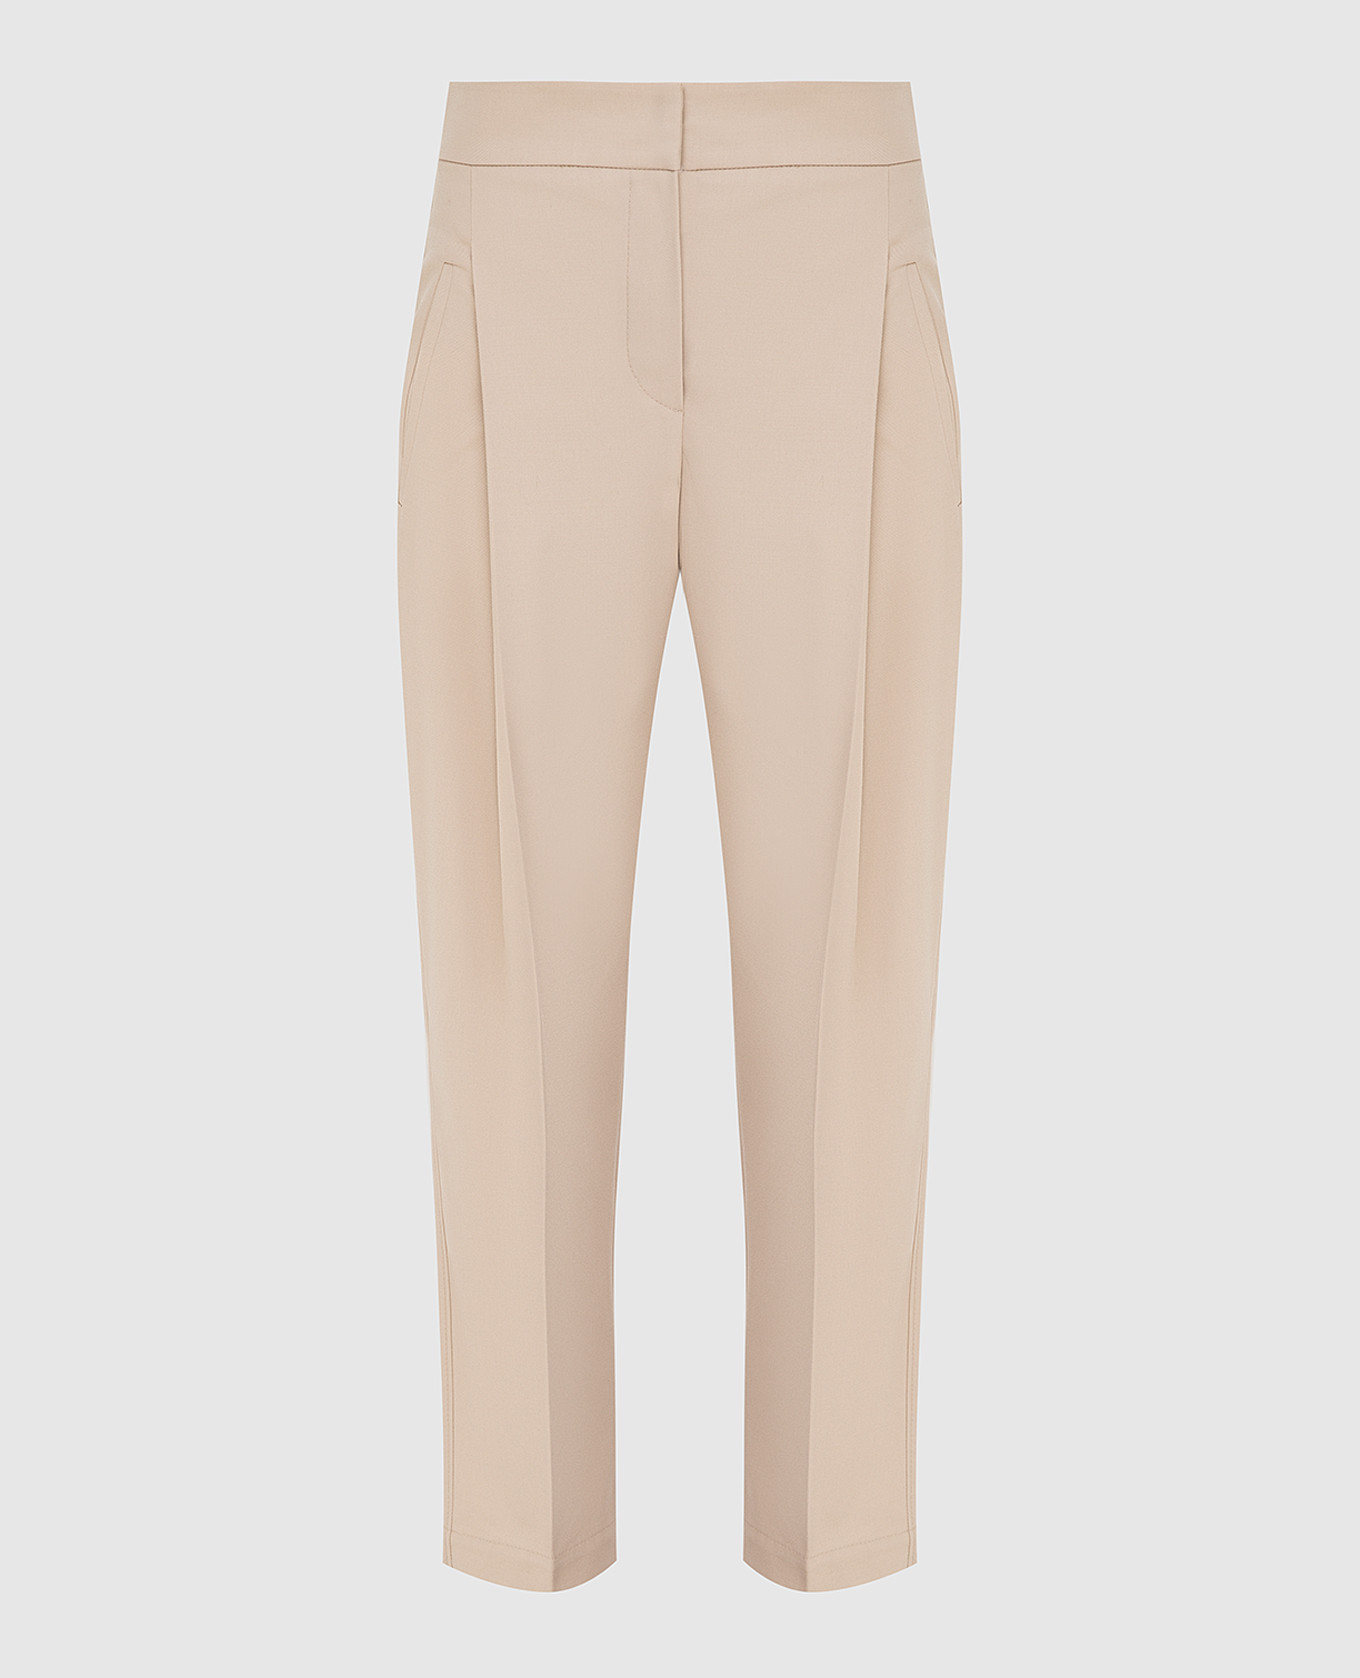 Light beige pleated trousers